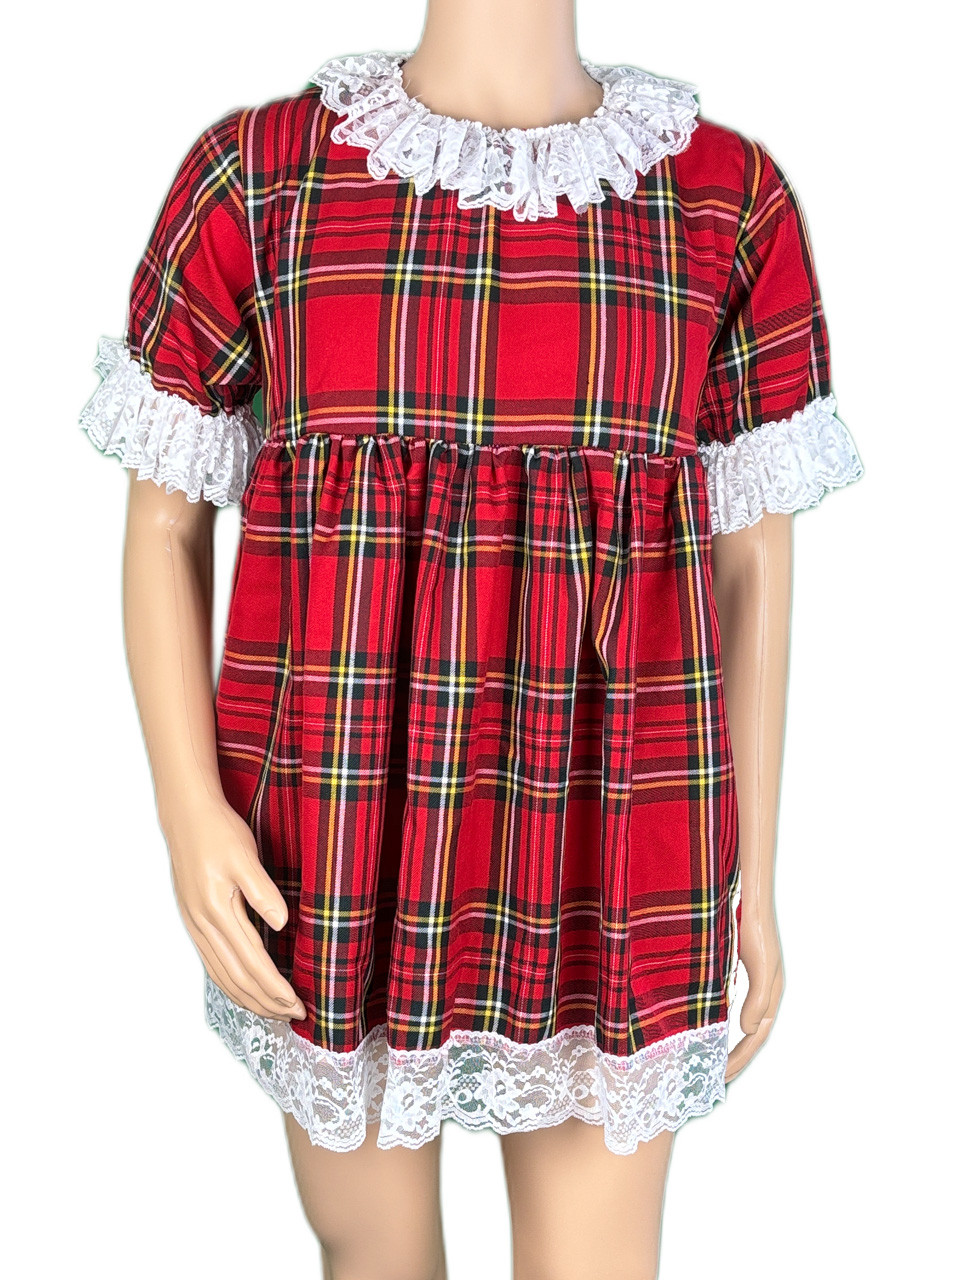 Cuddlz Red Tartan Baby Doll Dress FemBoy Clothing FemBoi Sissy